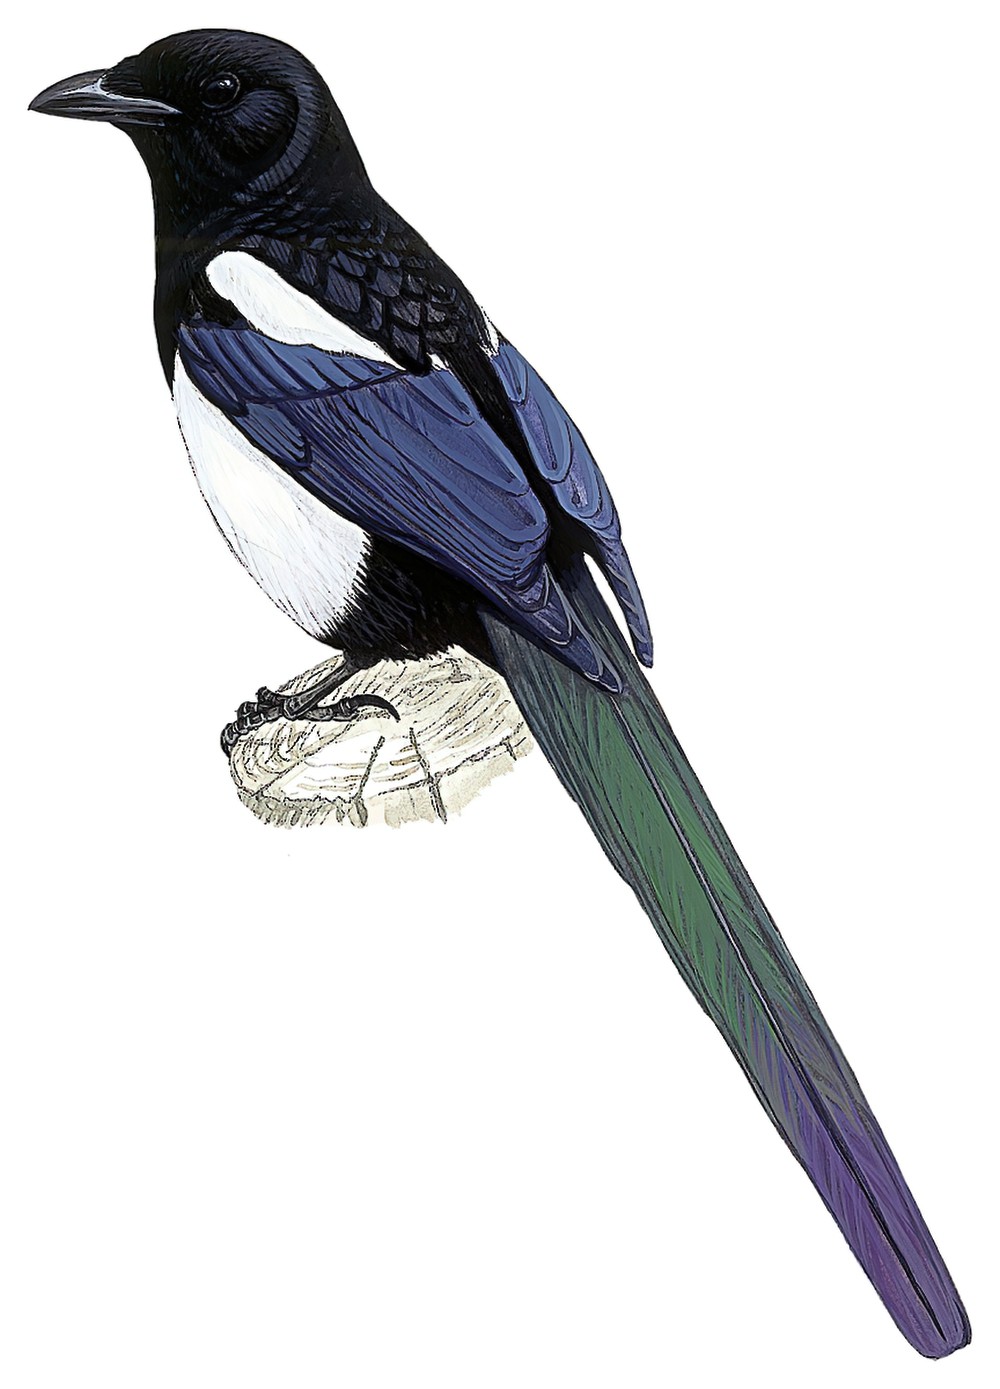 Black-billed Magpie / Pica hudsonia